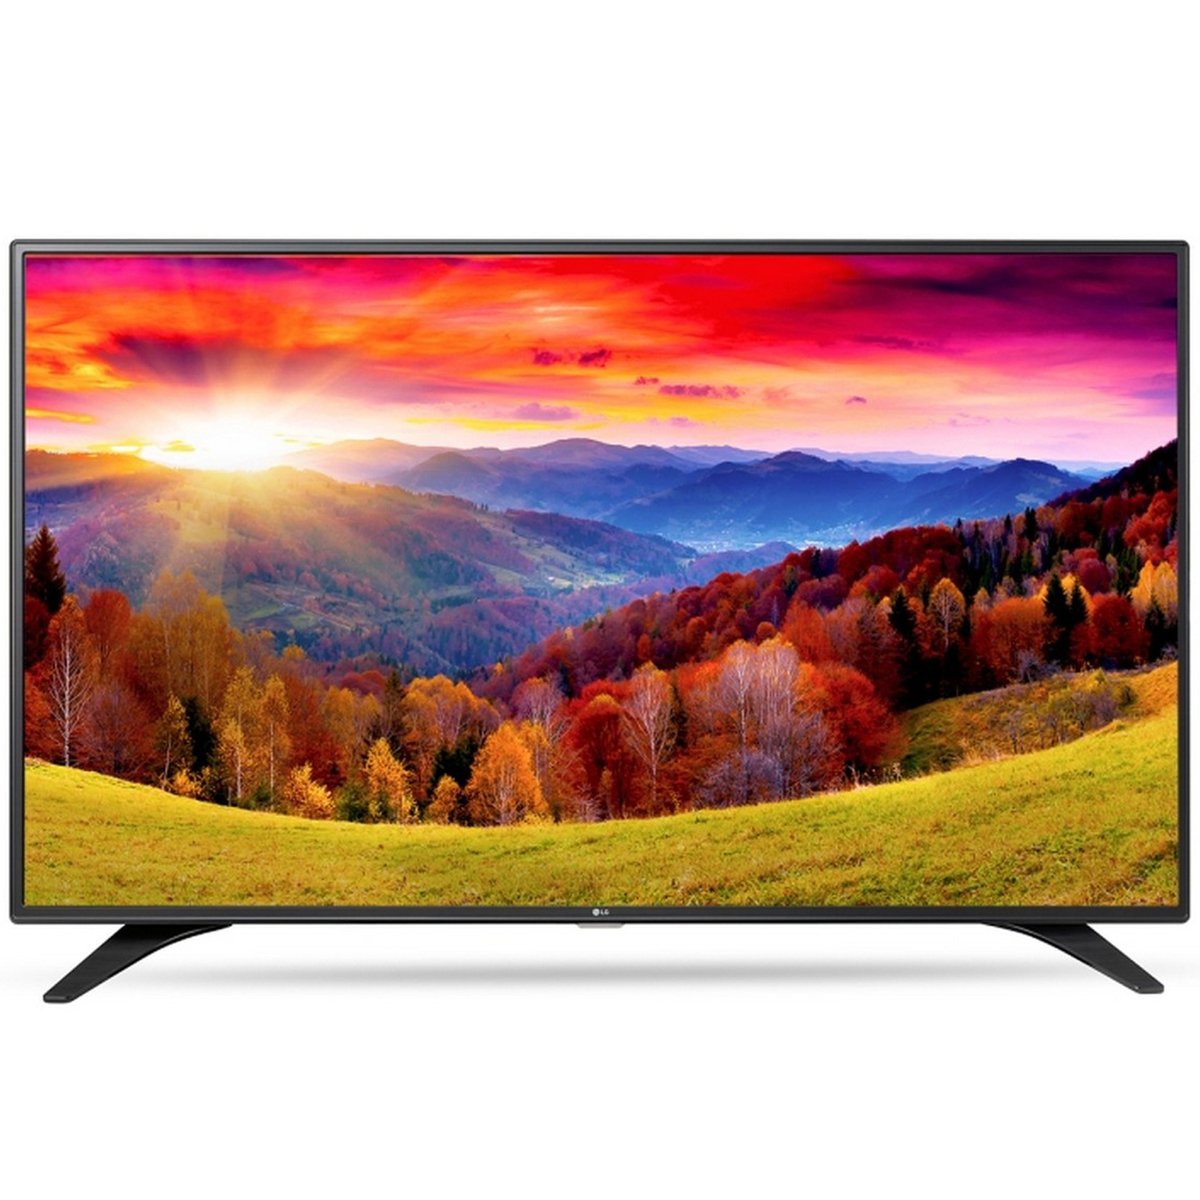 LG Full HD Smart LED TV 49LH600V 49inch